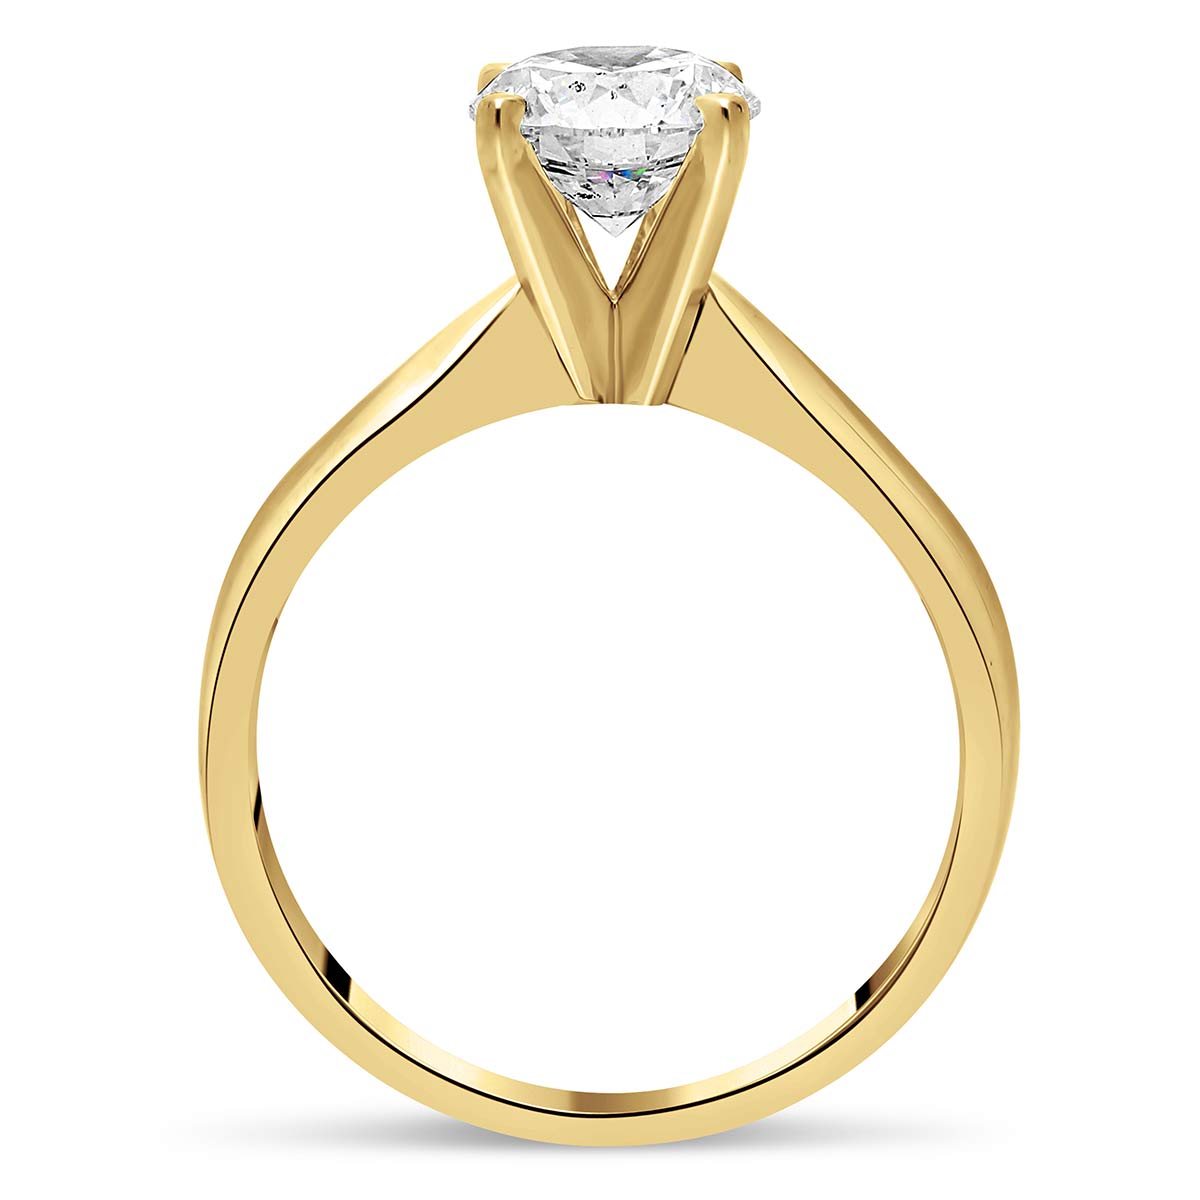 bahamas-solitaires-diamants-certifies-style-classique-or-jaune-750-